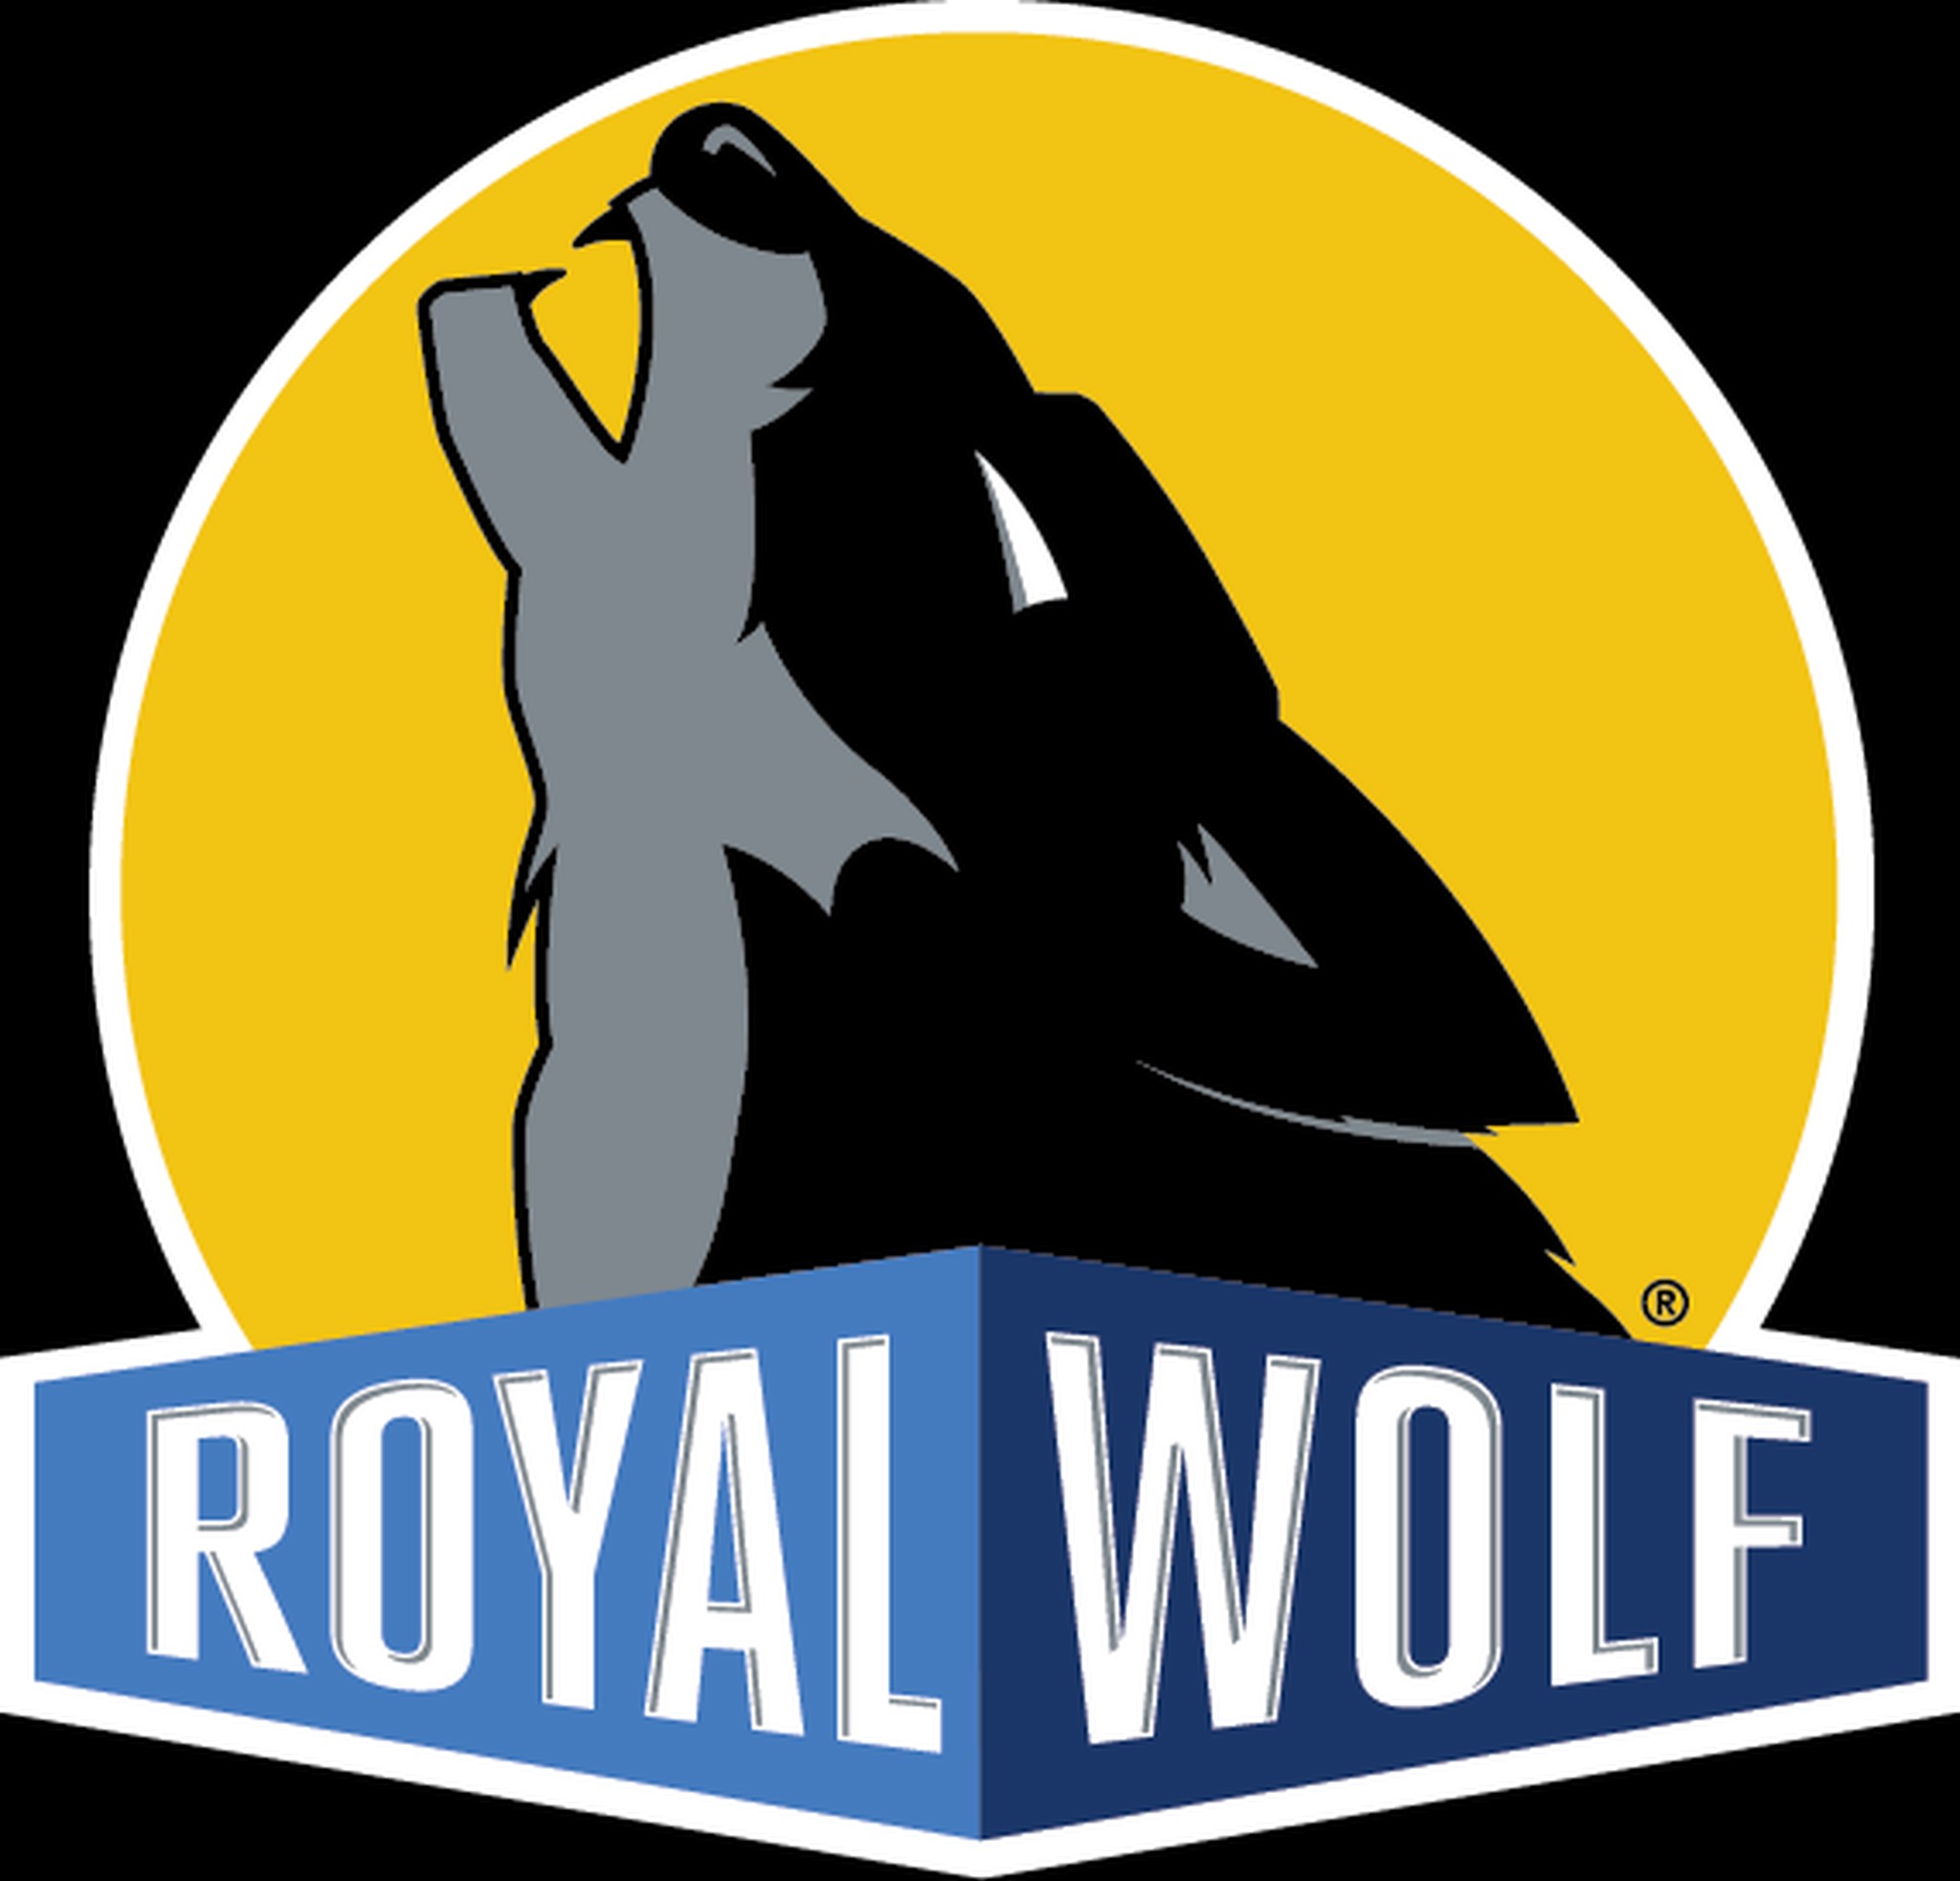 Royalwolf logo